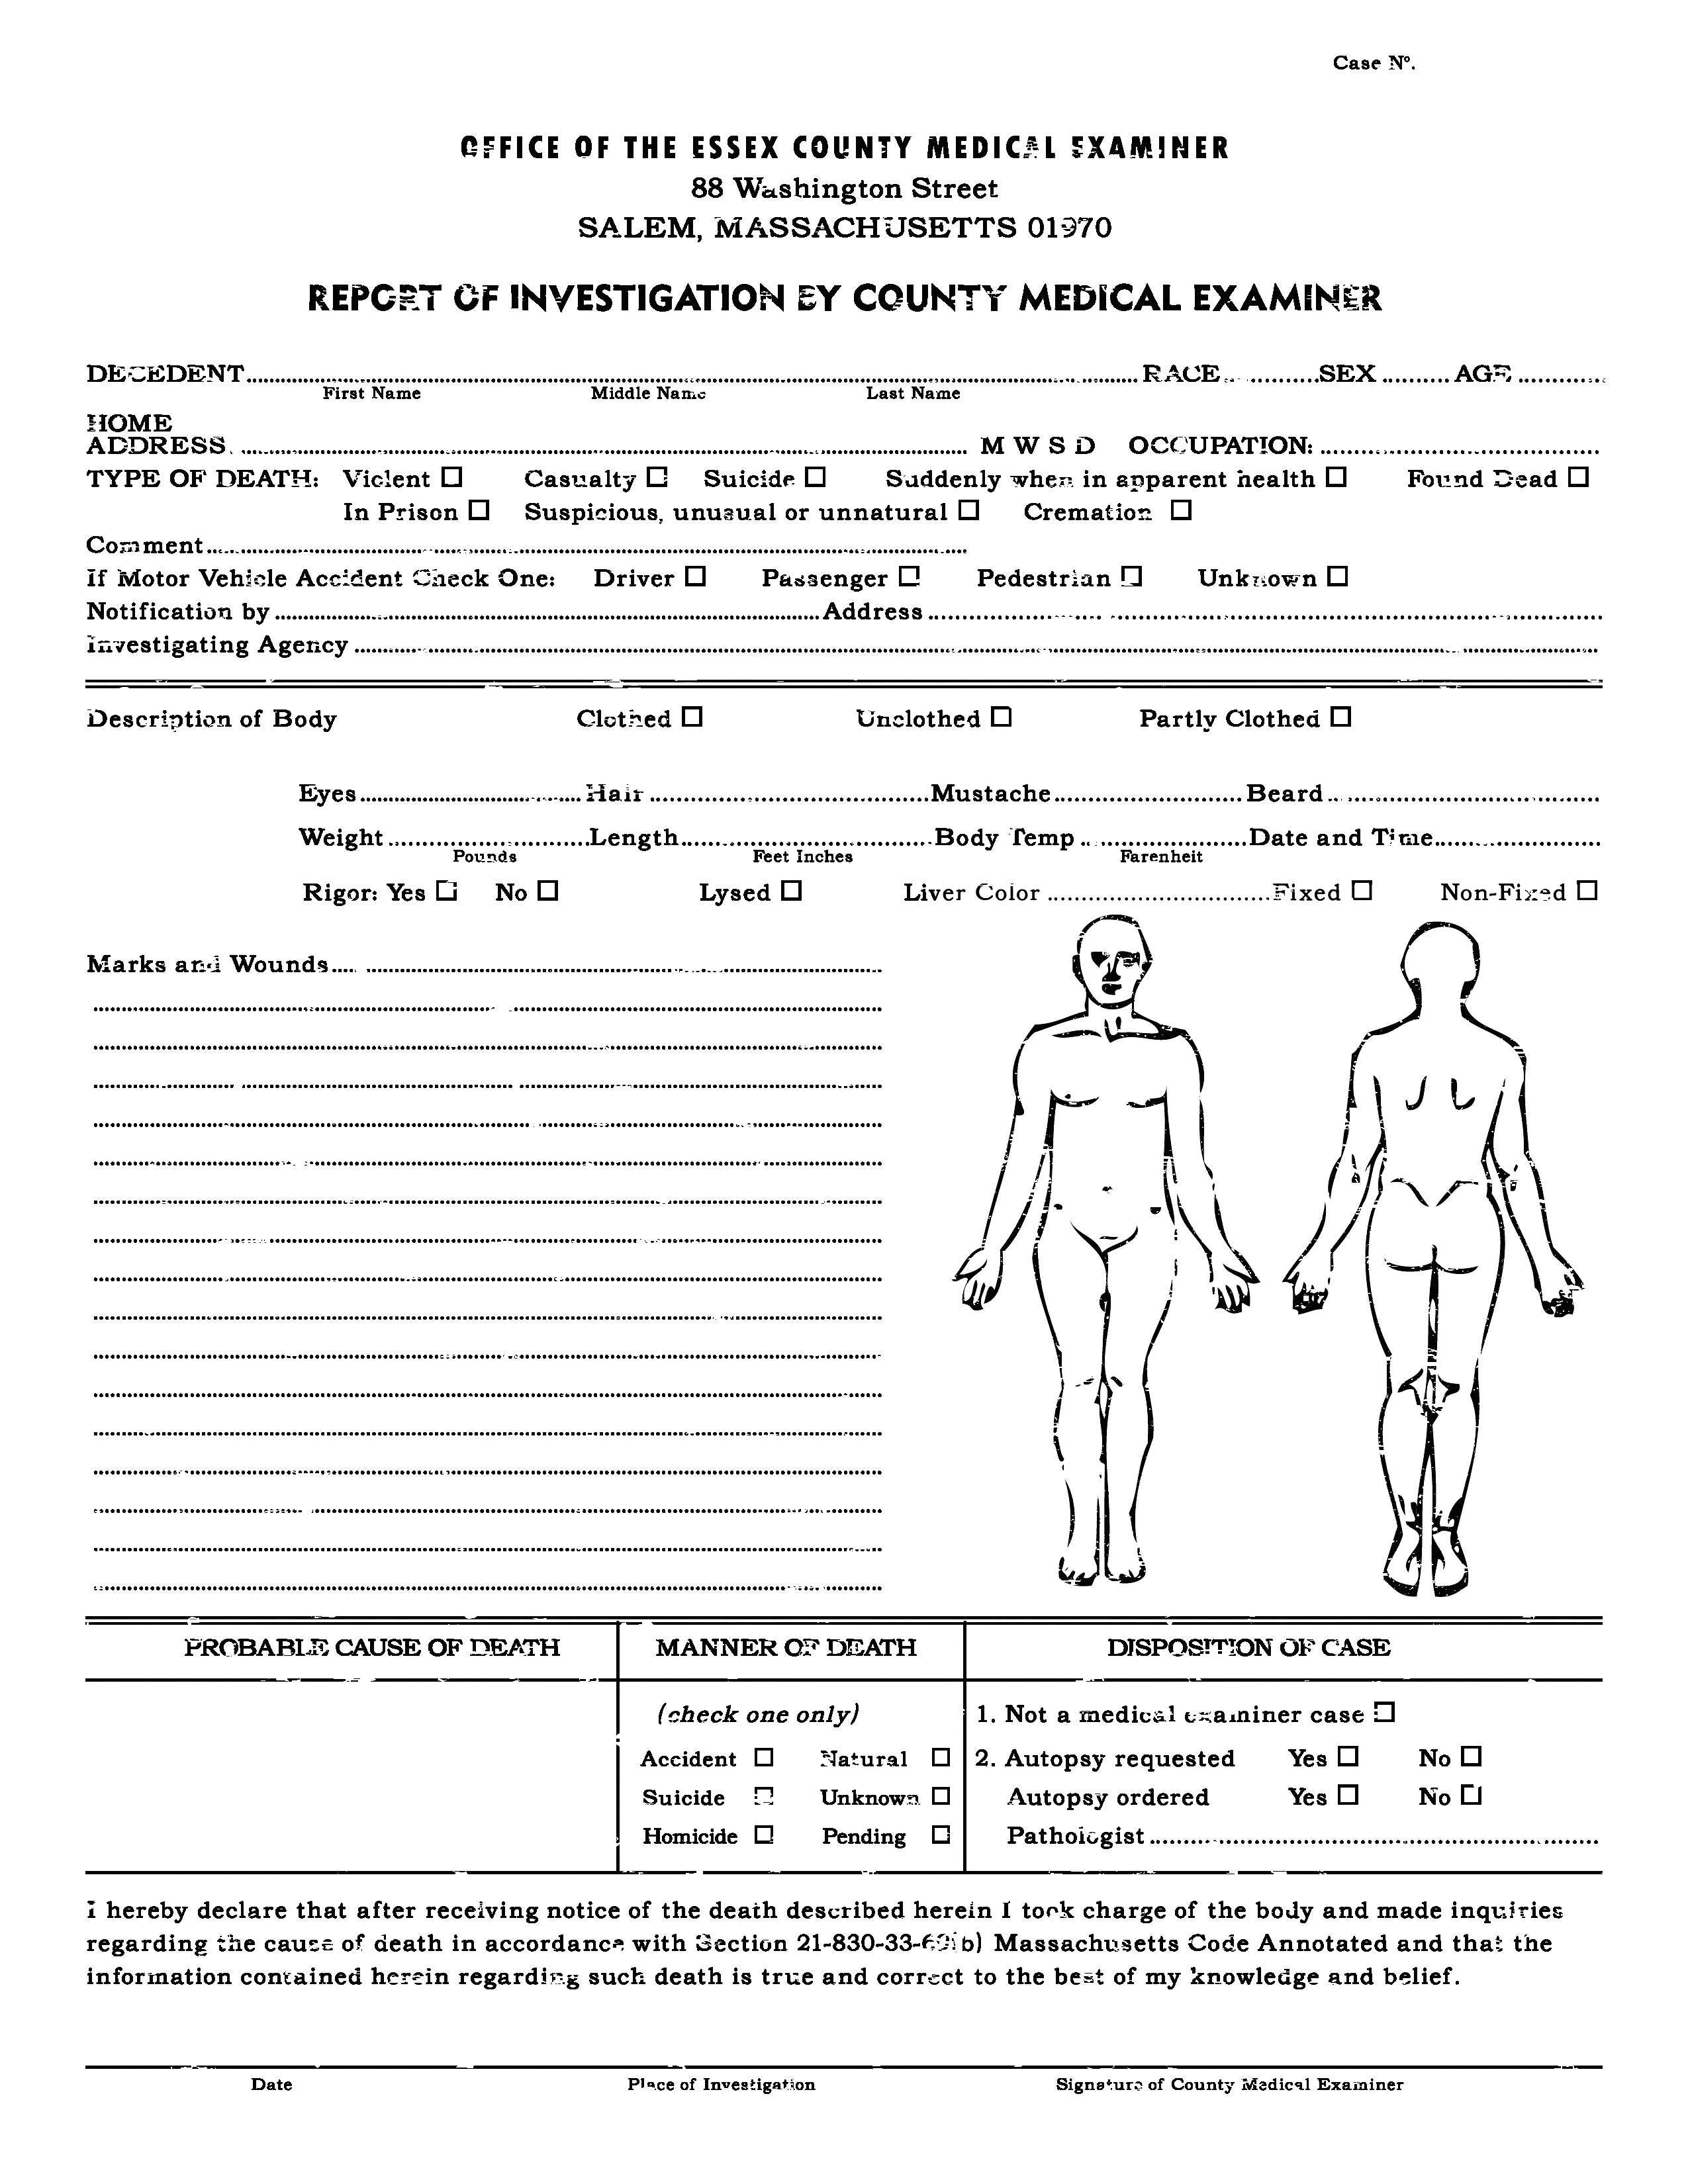 Autopsy Report Template - Atlantaauctionco Intended For Blank Autopsy Report Template